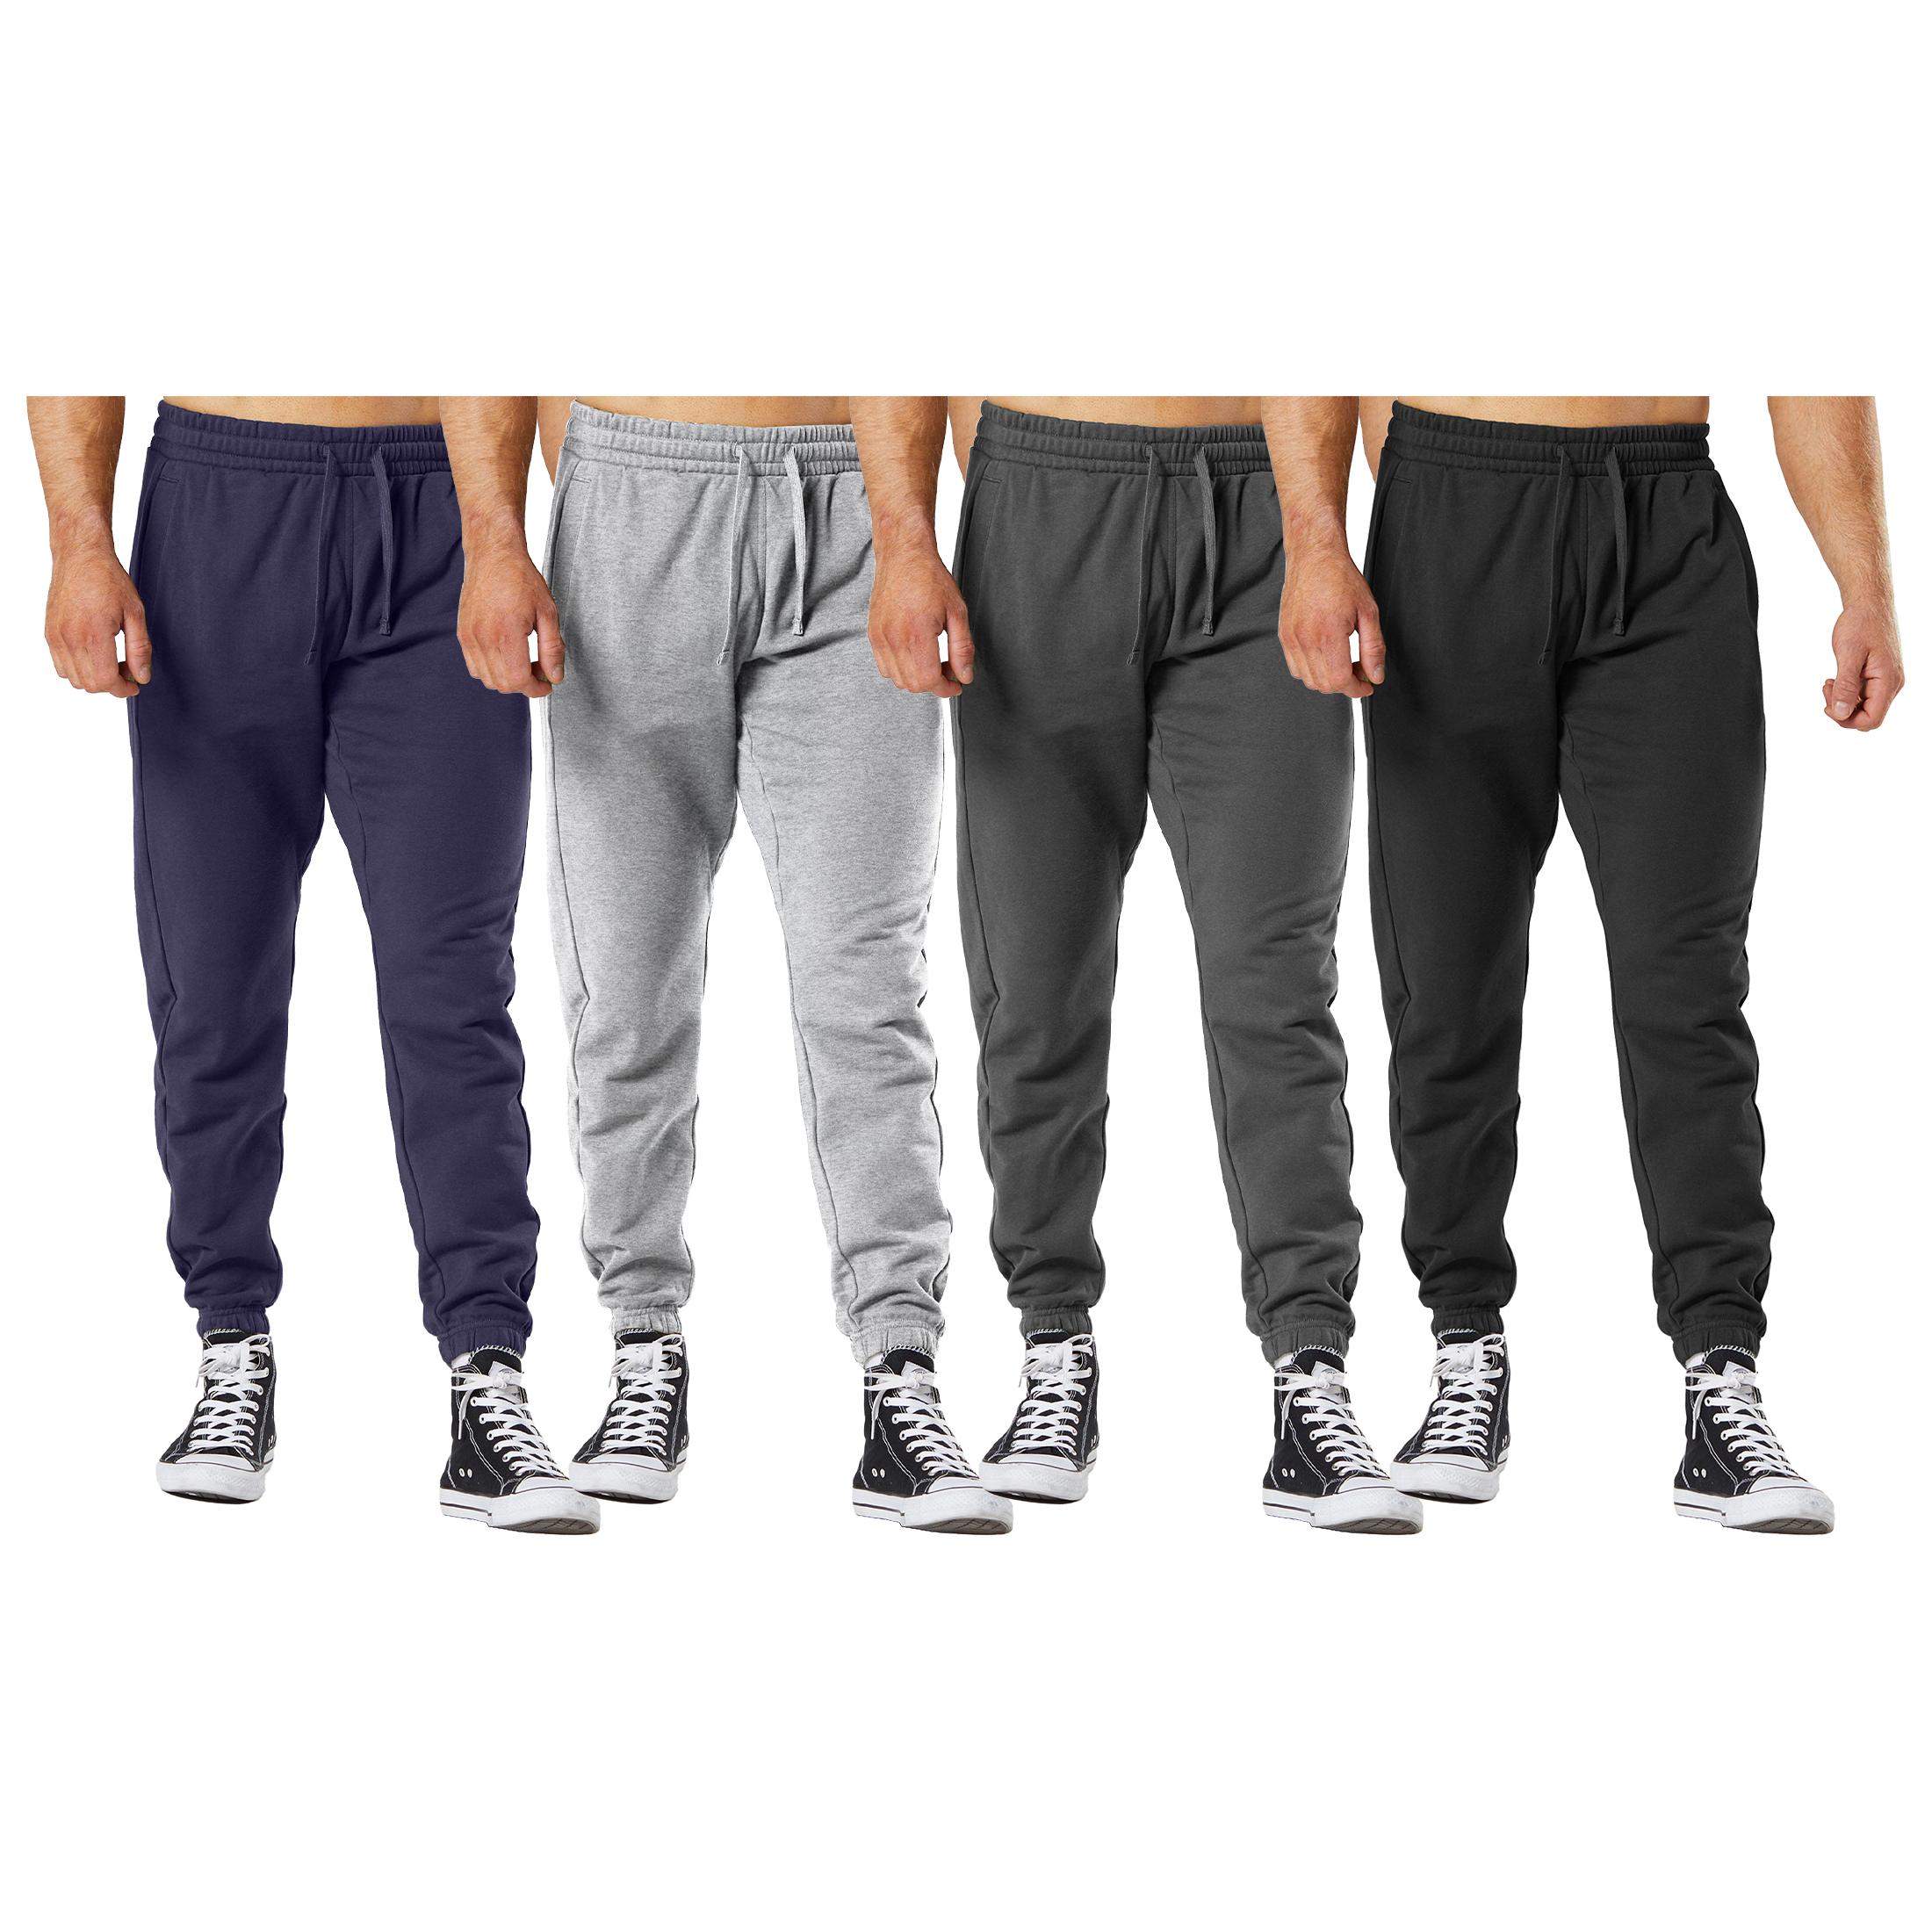 3-Pack: Men's Casual Fleece-Lined Elastic Bottom Sweatpants Jogger Pants With Pockets - Solid, Medium